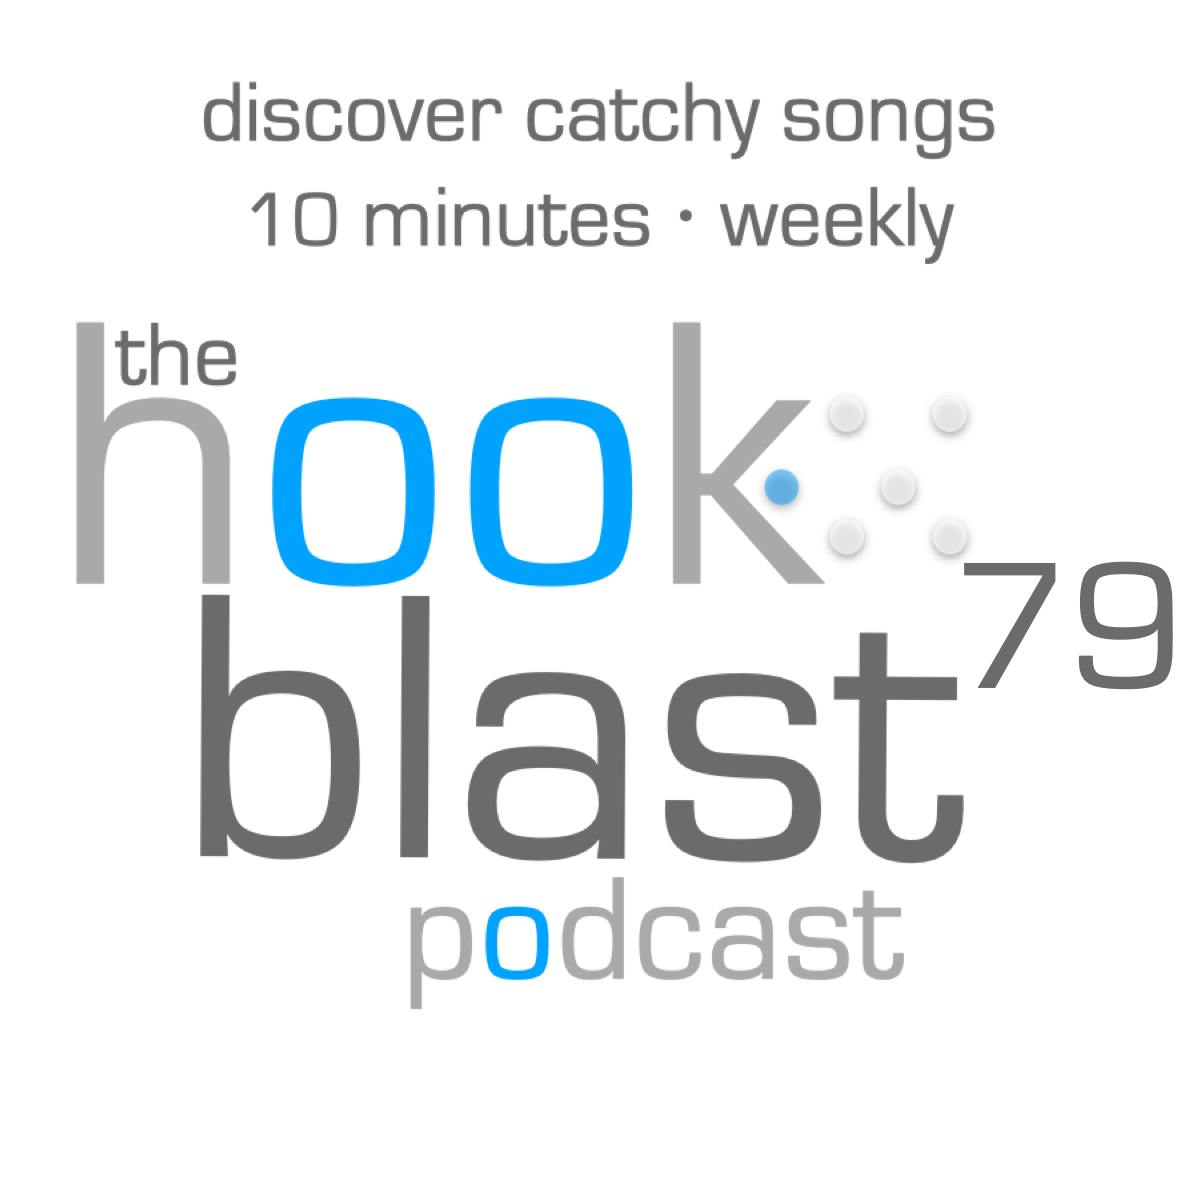 The Hookblast Podcast - Episode 79